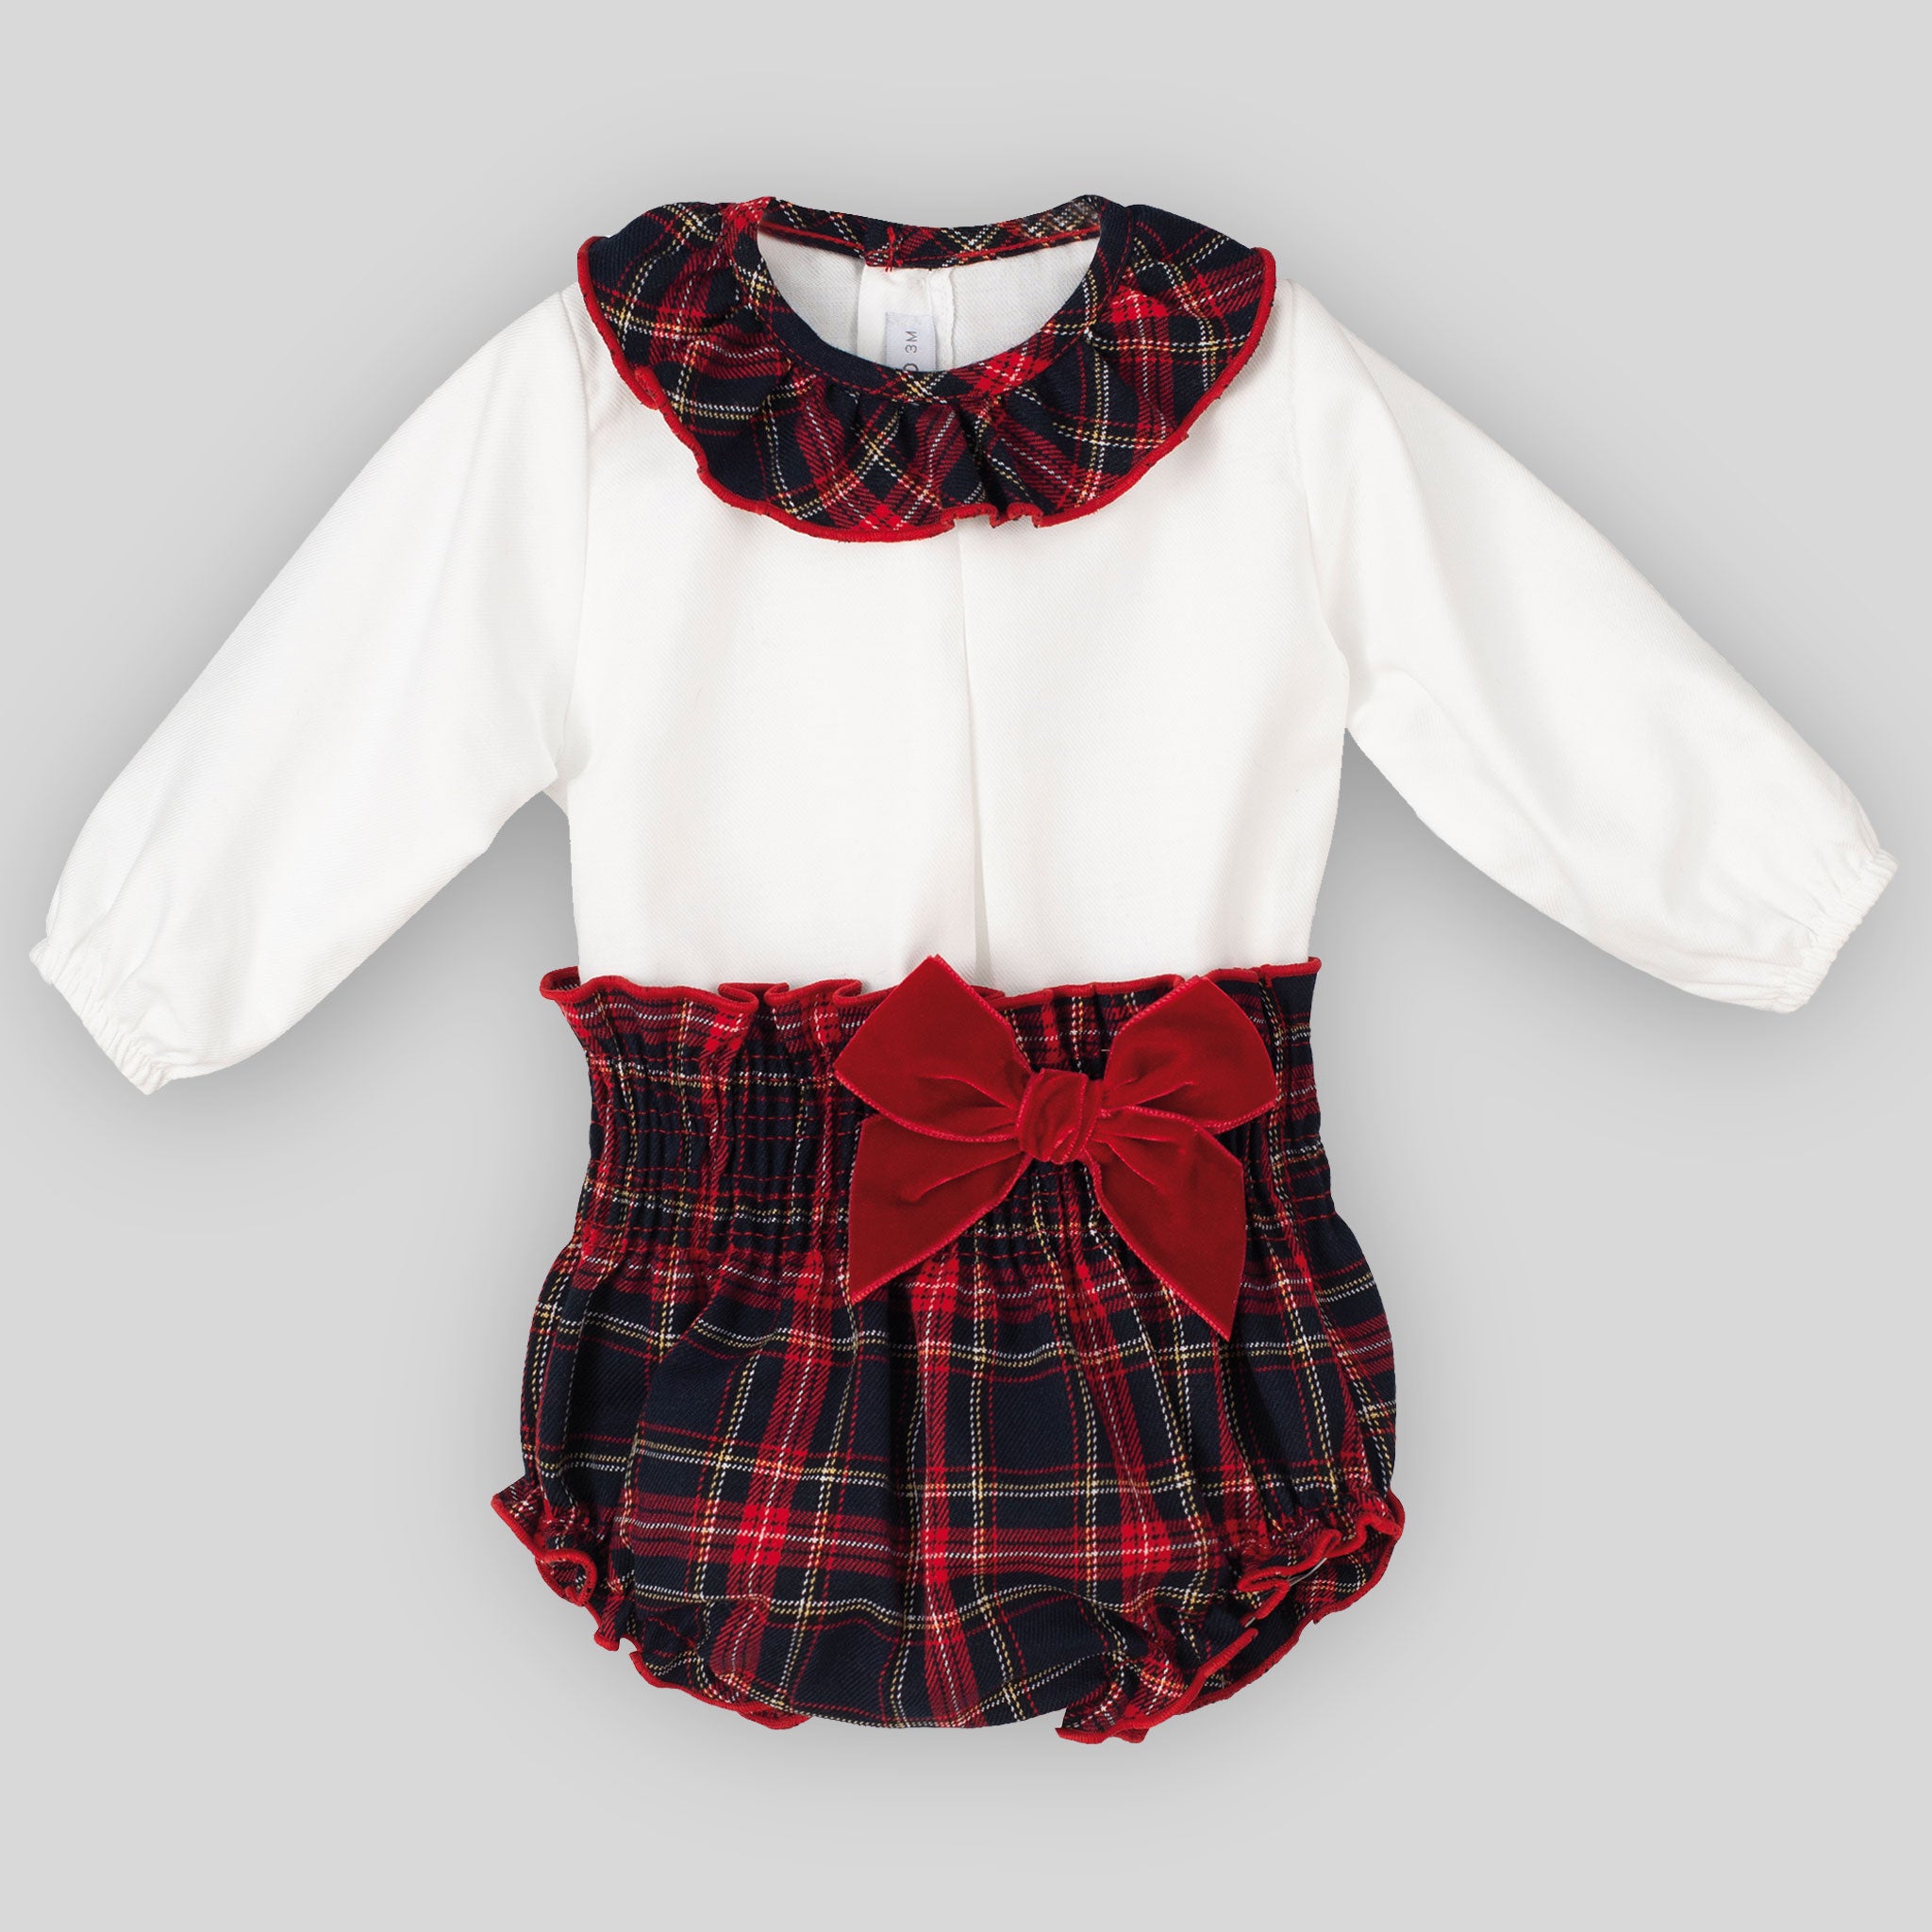 Red tartan jam pants and white shirt for baby girl